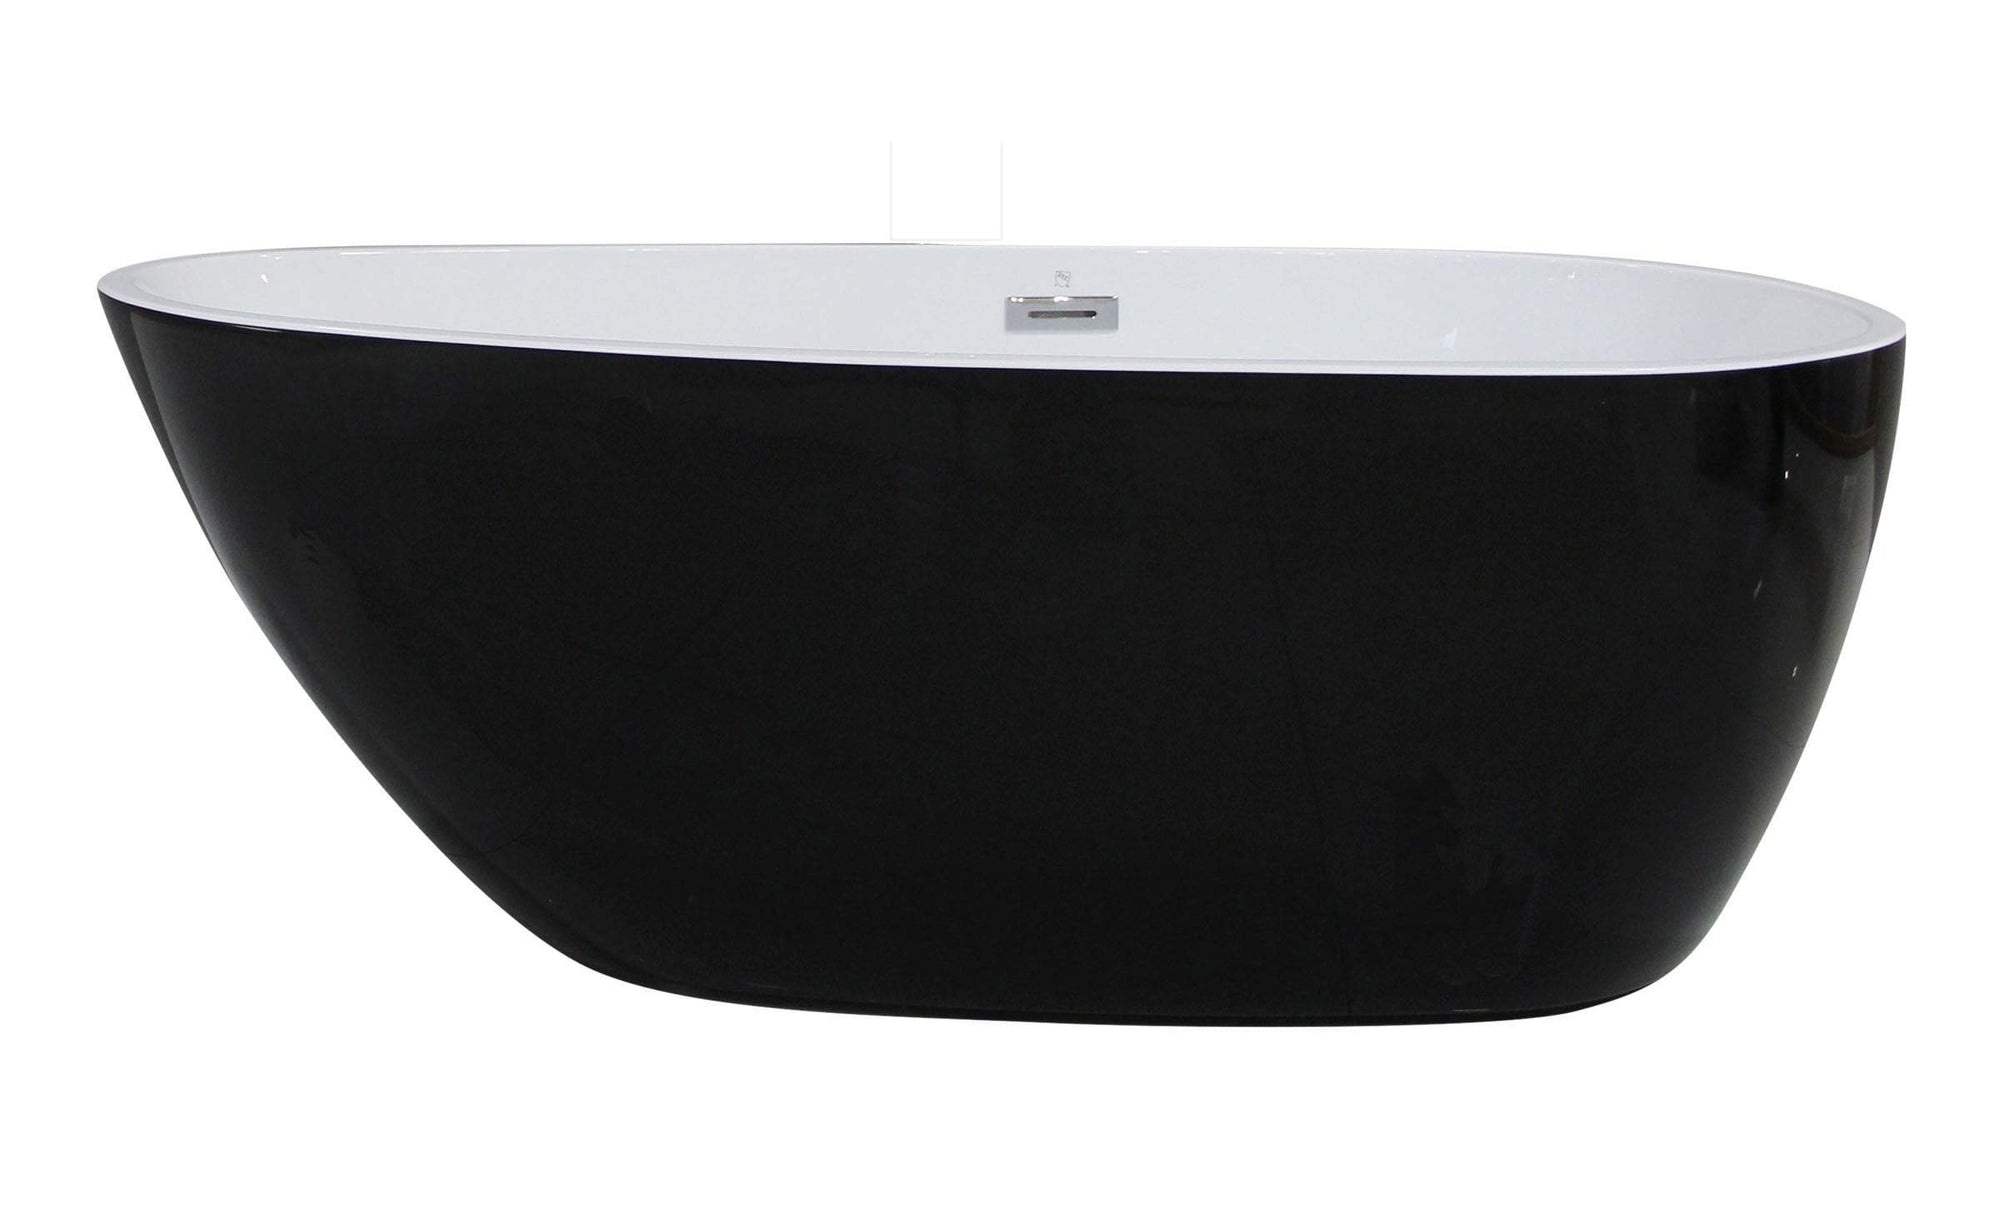 ALFI brand AB8862 59 inch Black & White Oval Acrylic Free Standing Soaking Bathtub